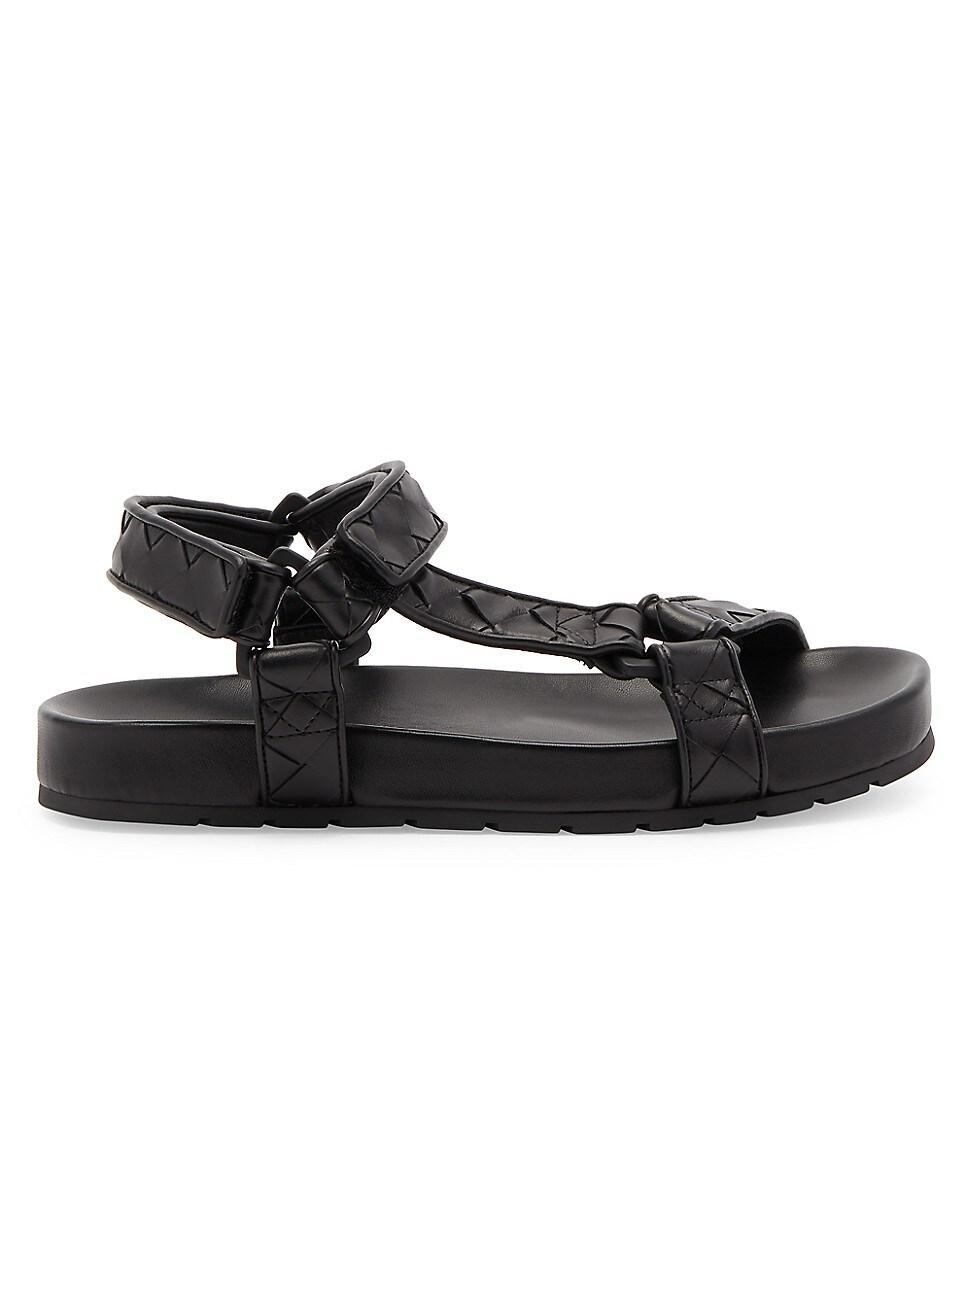 Bottega Veneta Womens Leather Flat Sandals Product Image